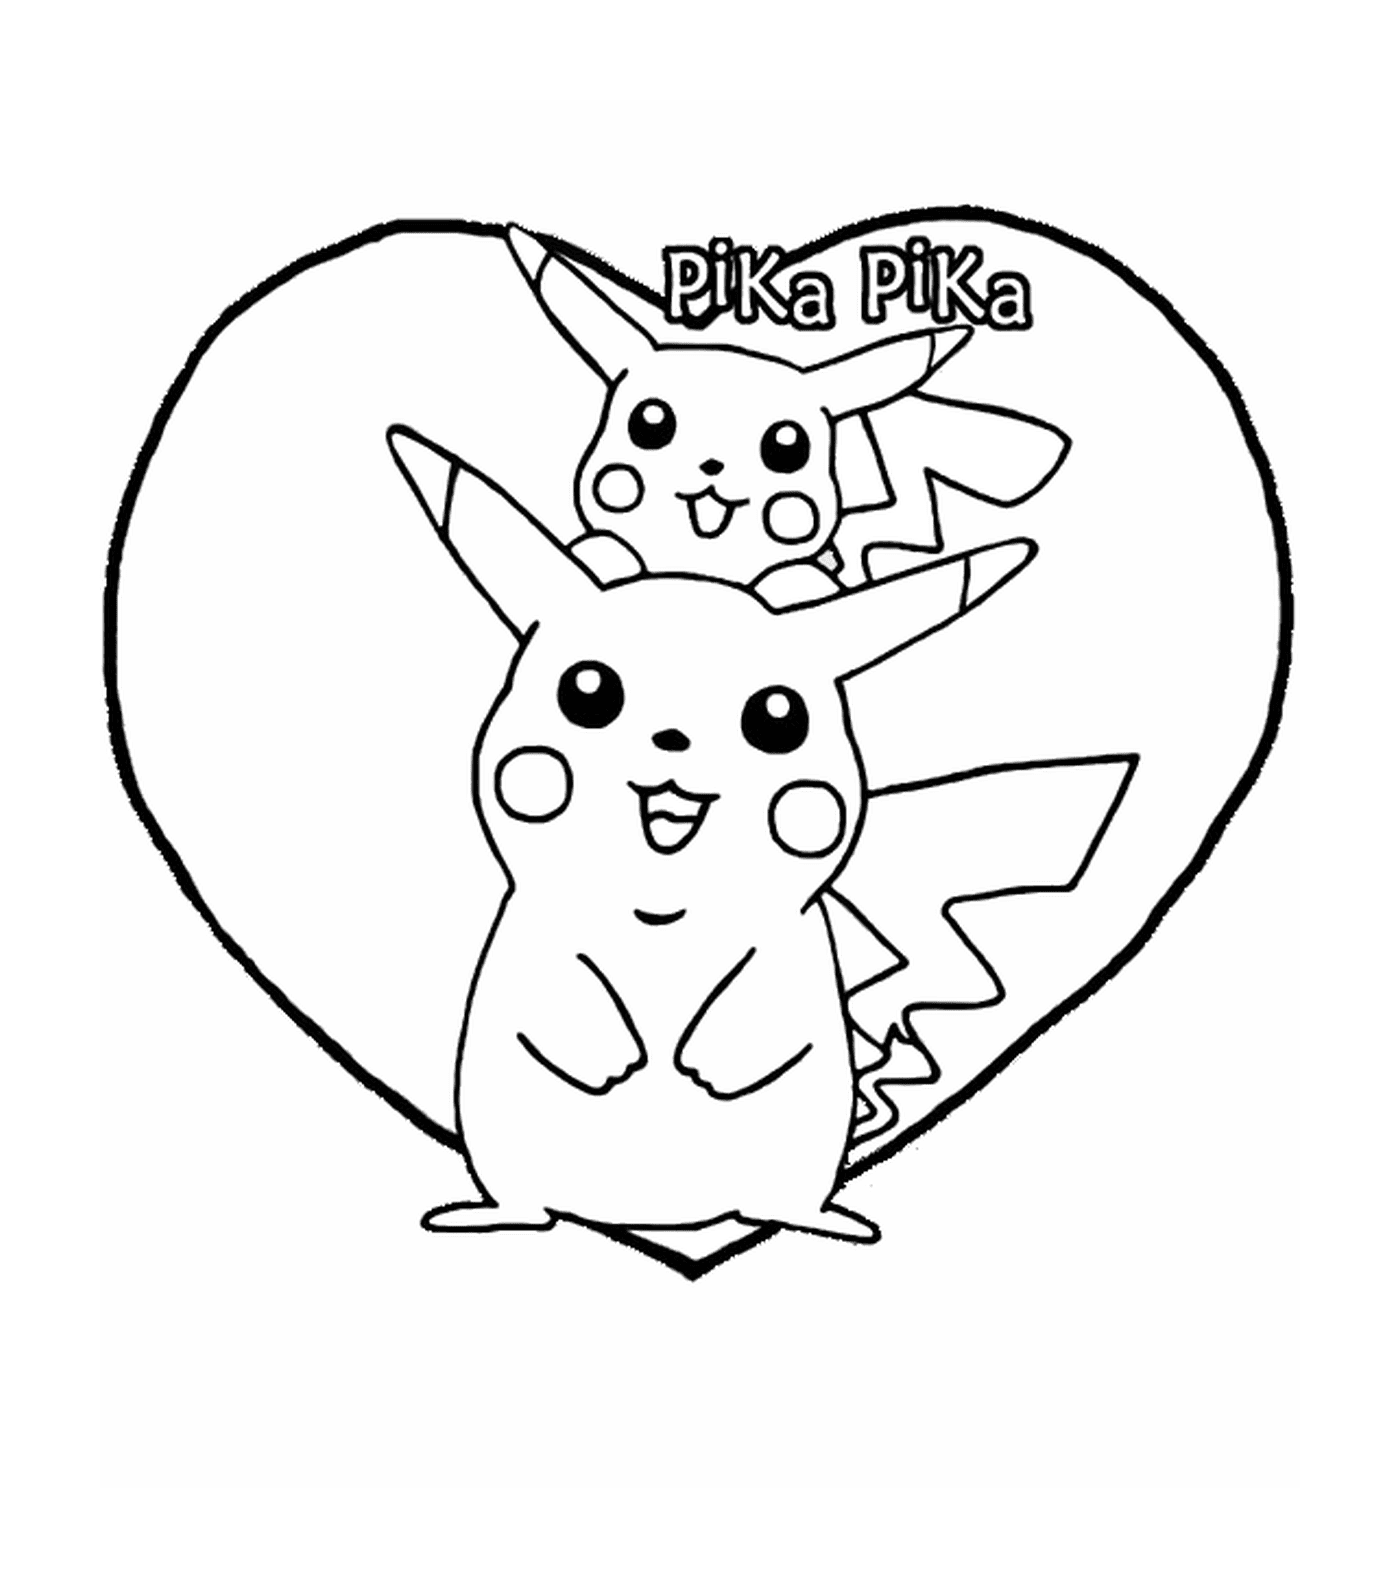  Pikachu, adorable heart 